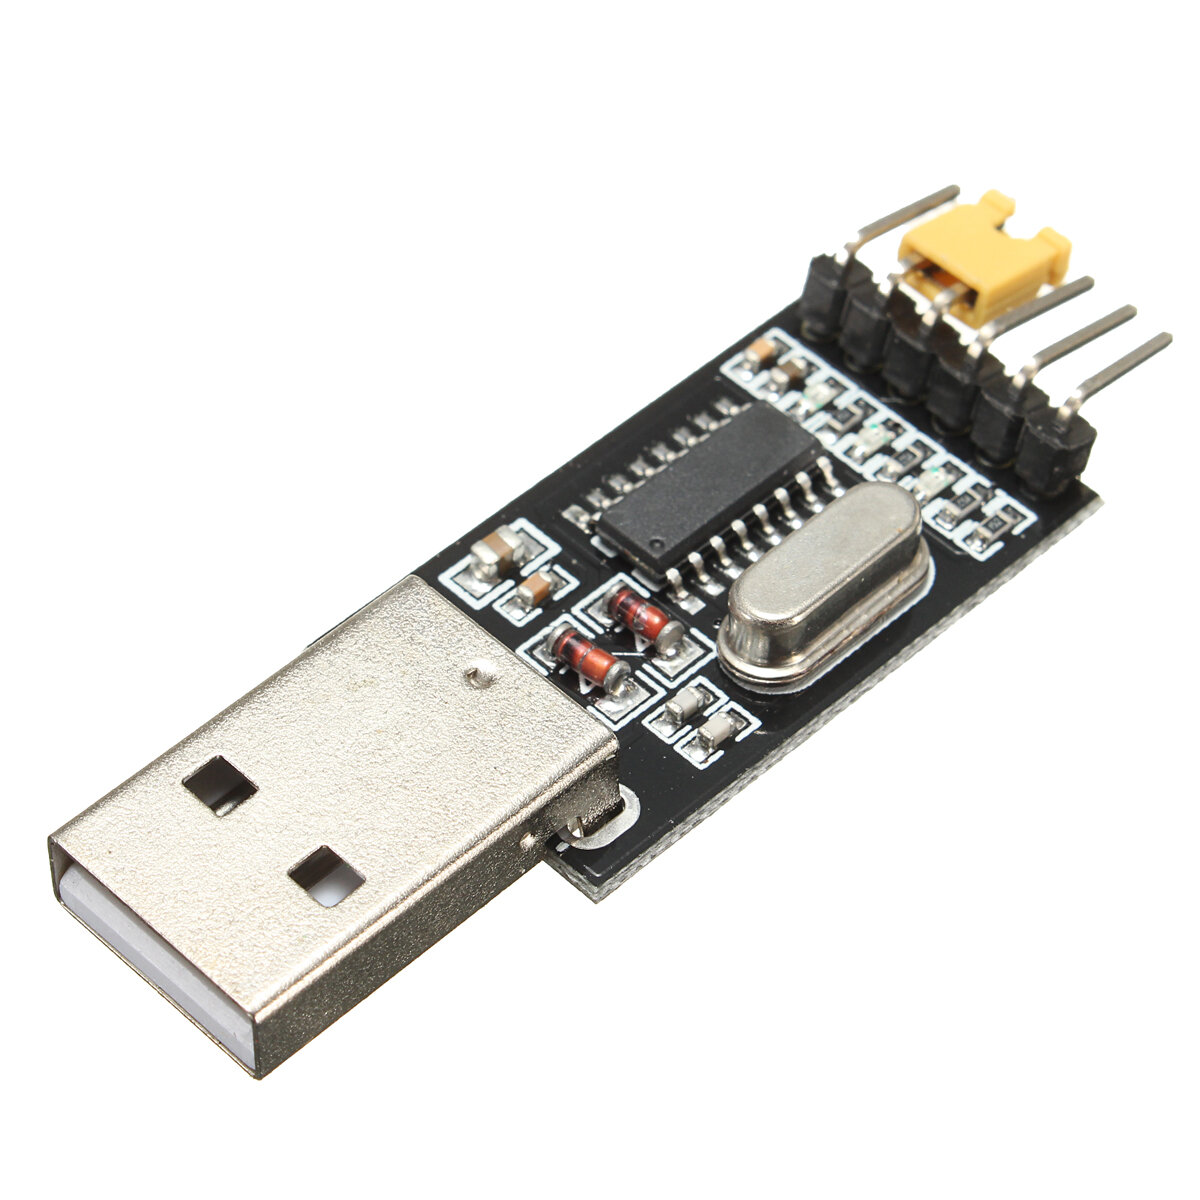 3.3V 5V USB to TTL Converter CH340G UART Serial Adapter Module STC